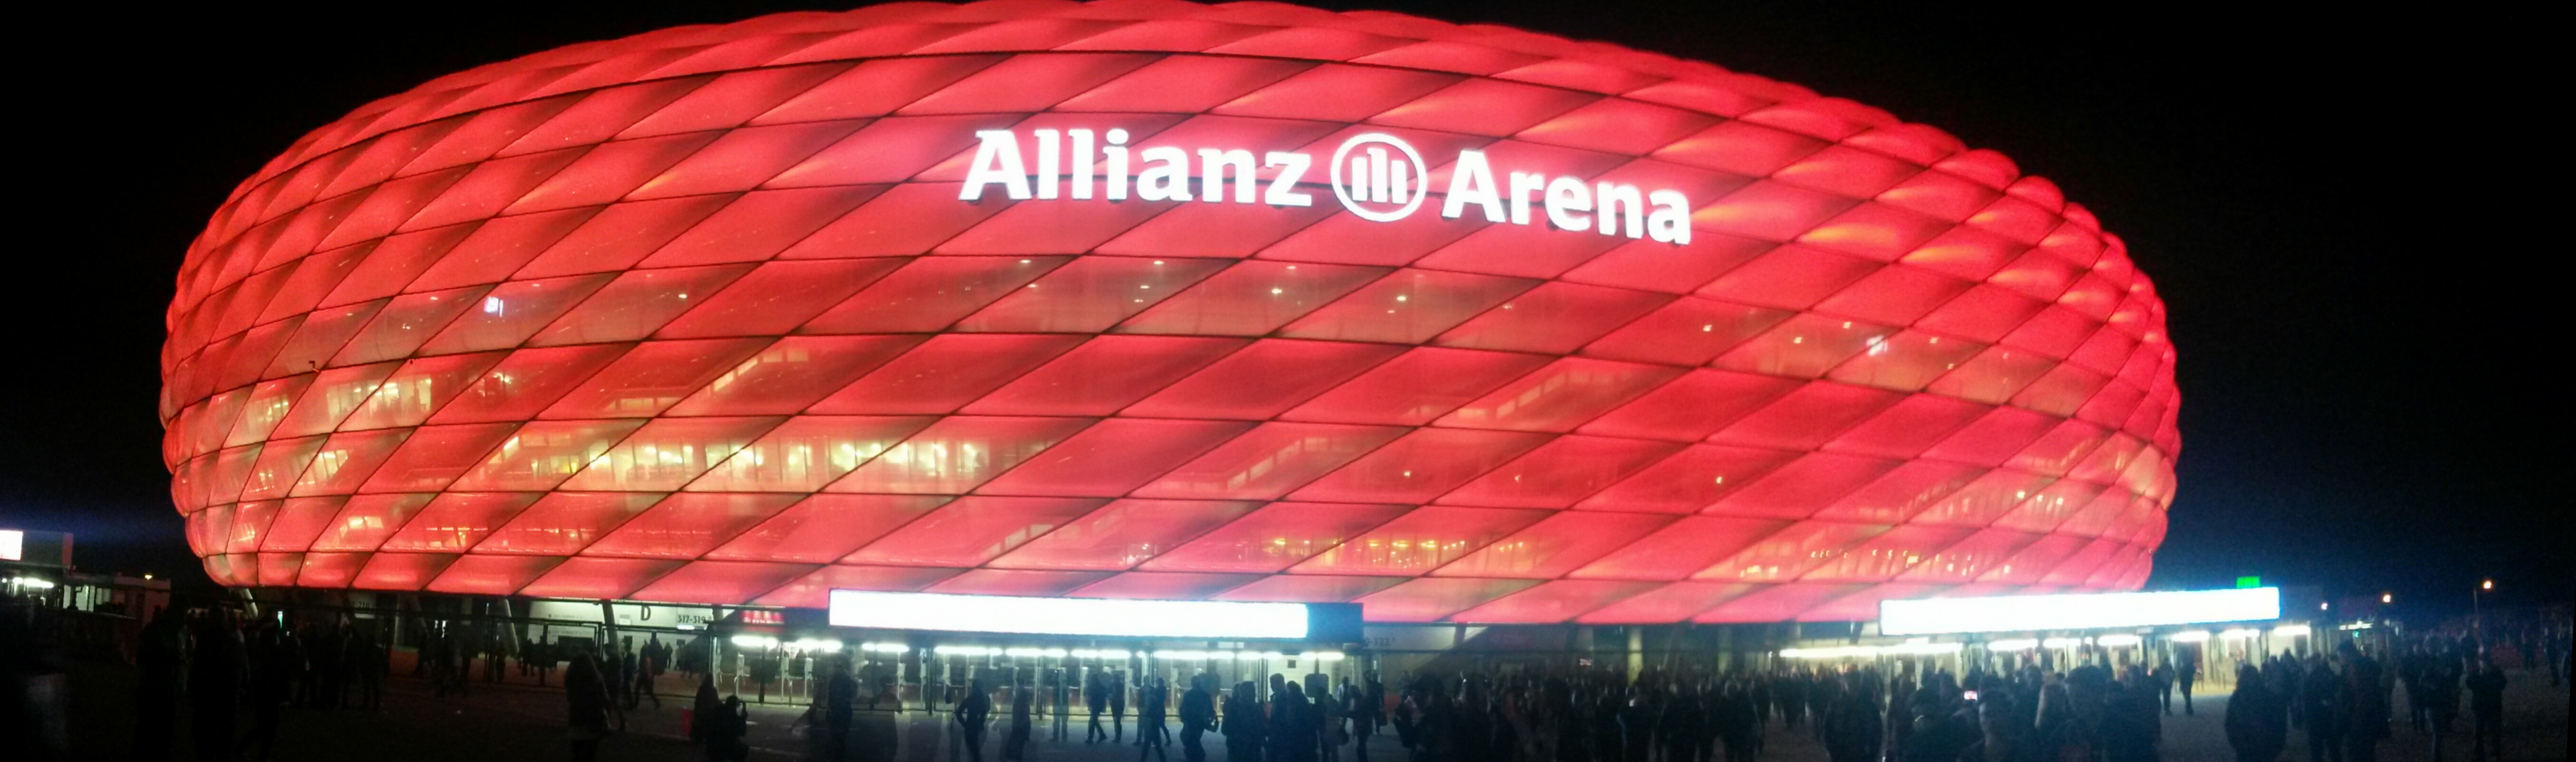 2016-04 München vs. Schalke